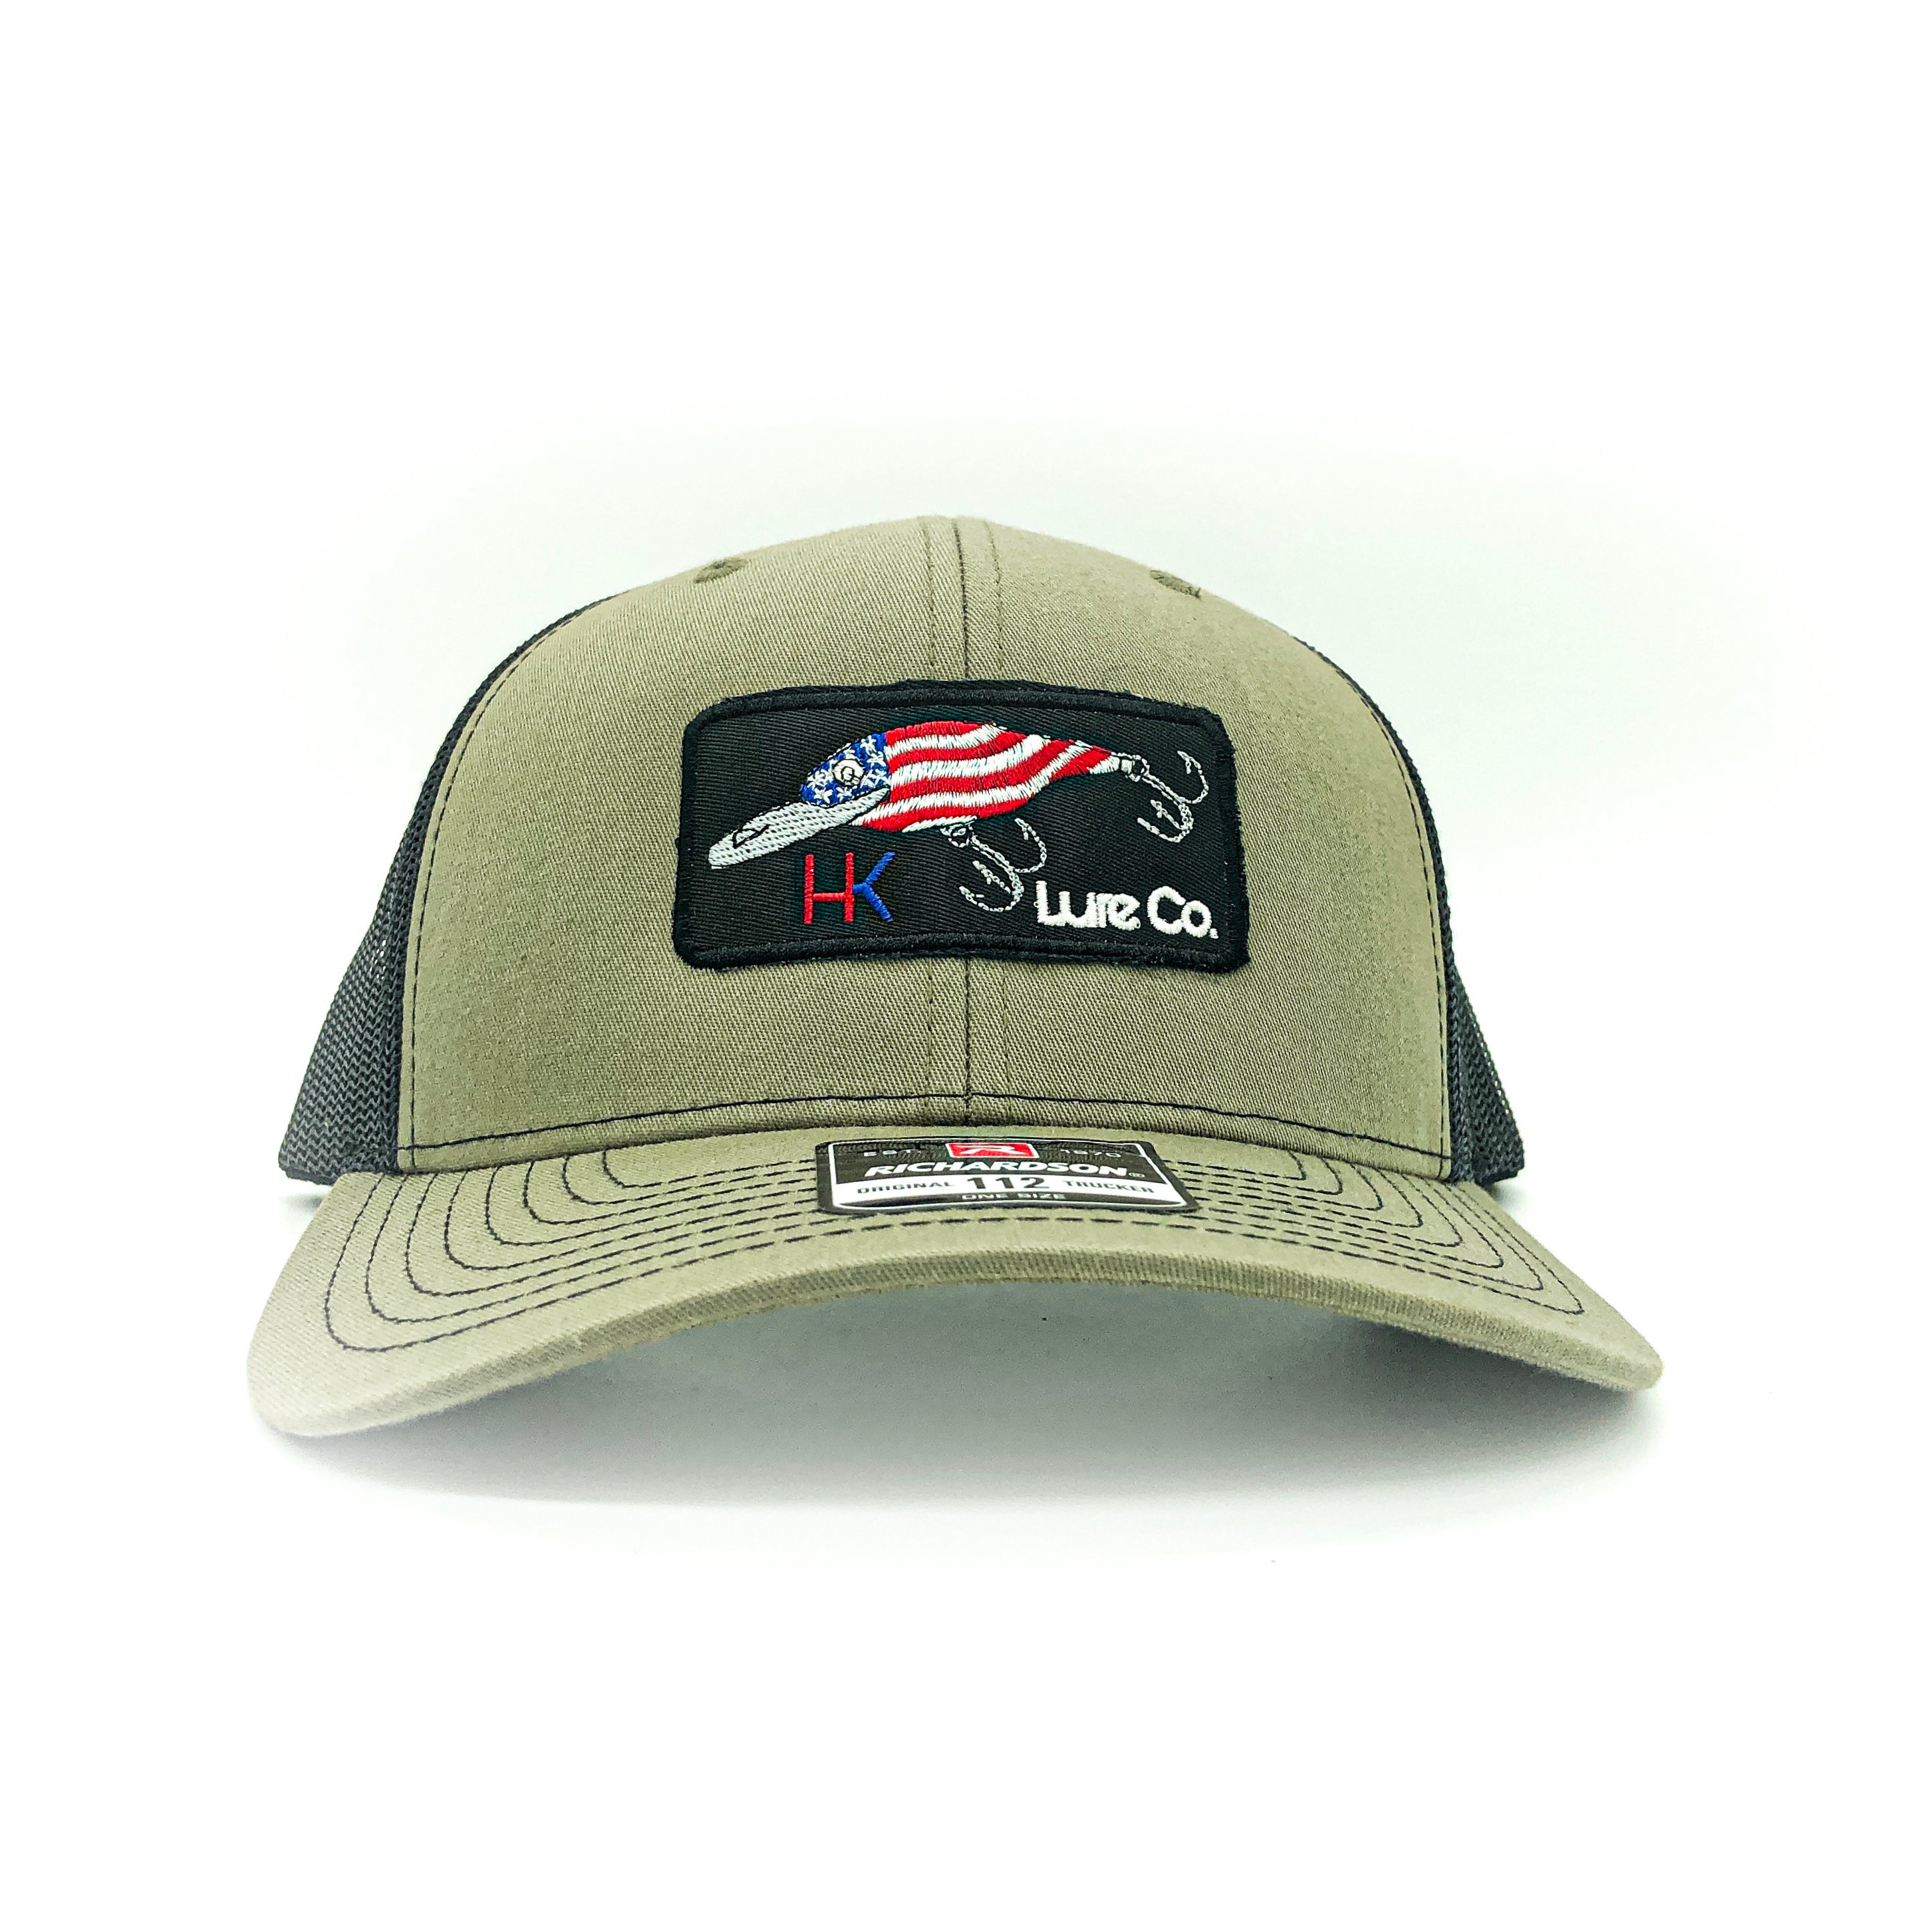 Olive Green trucker hat